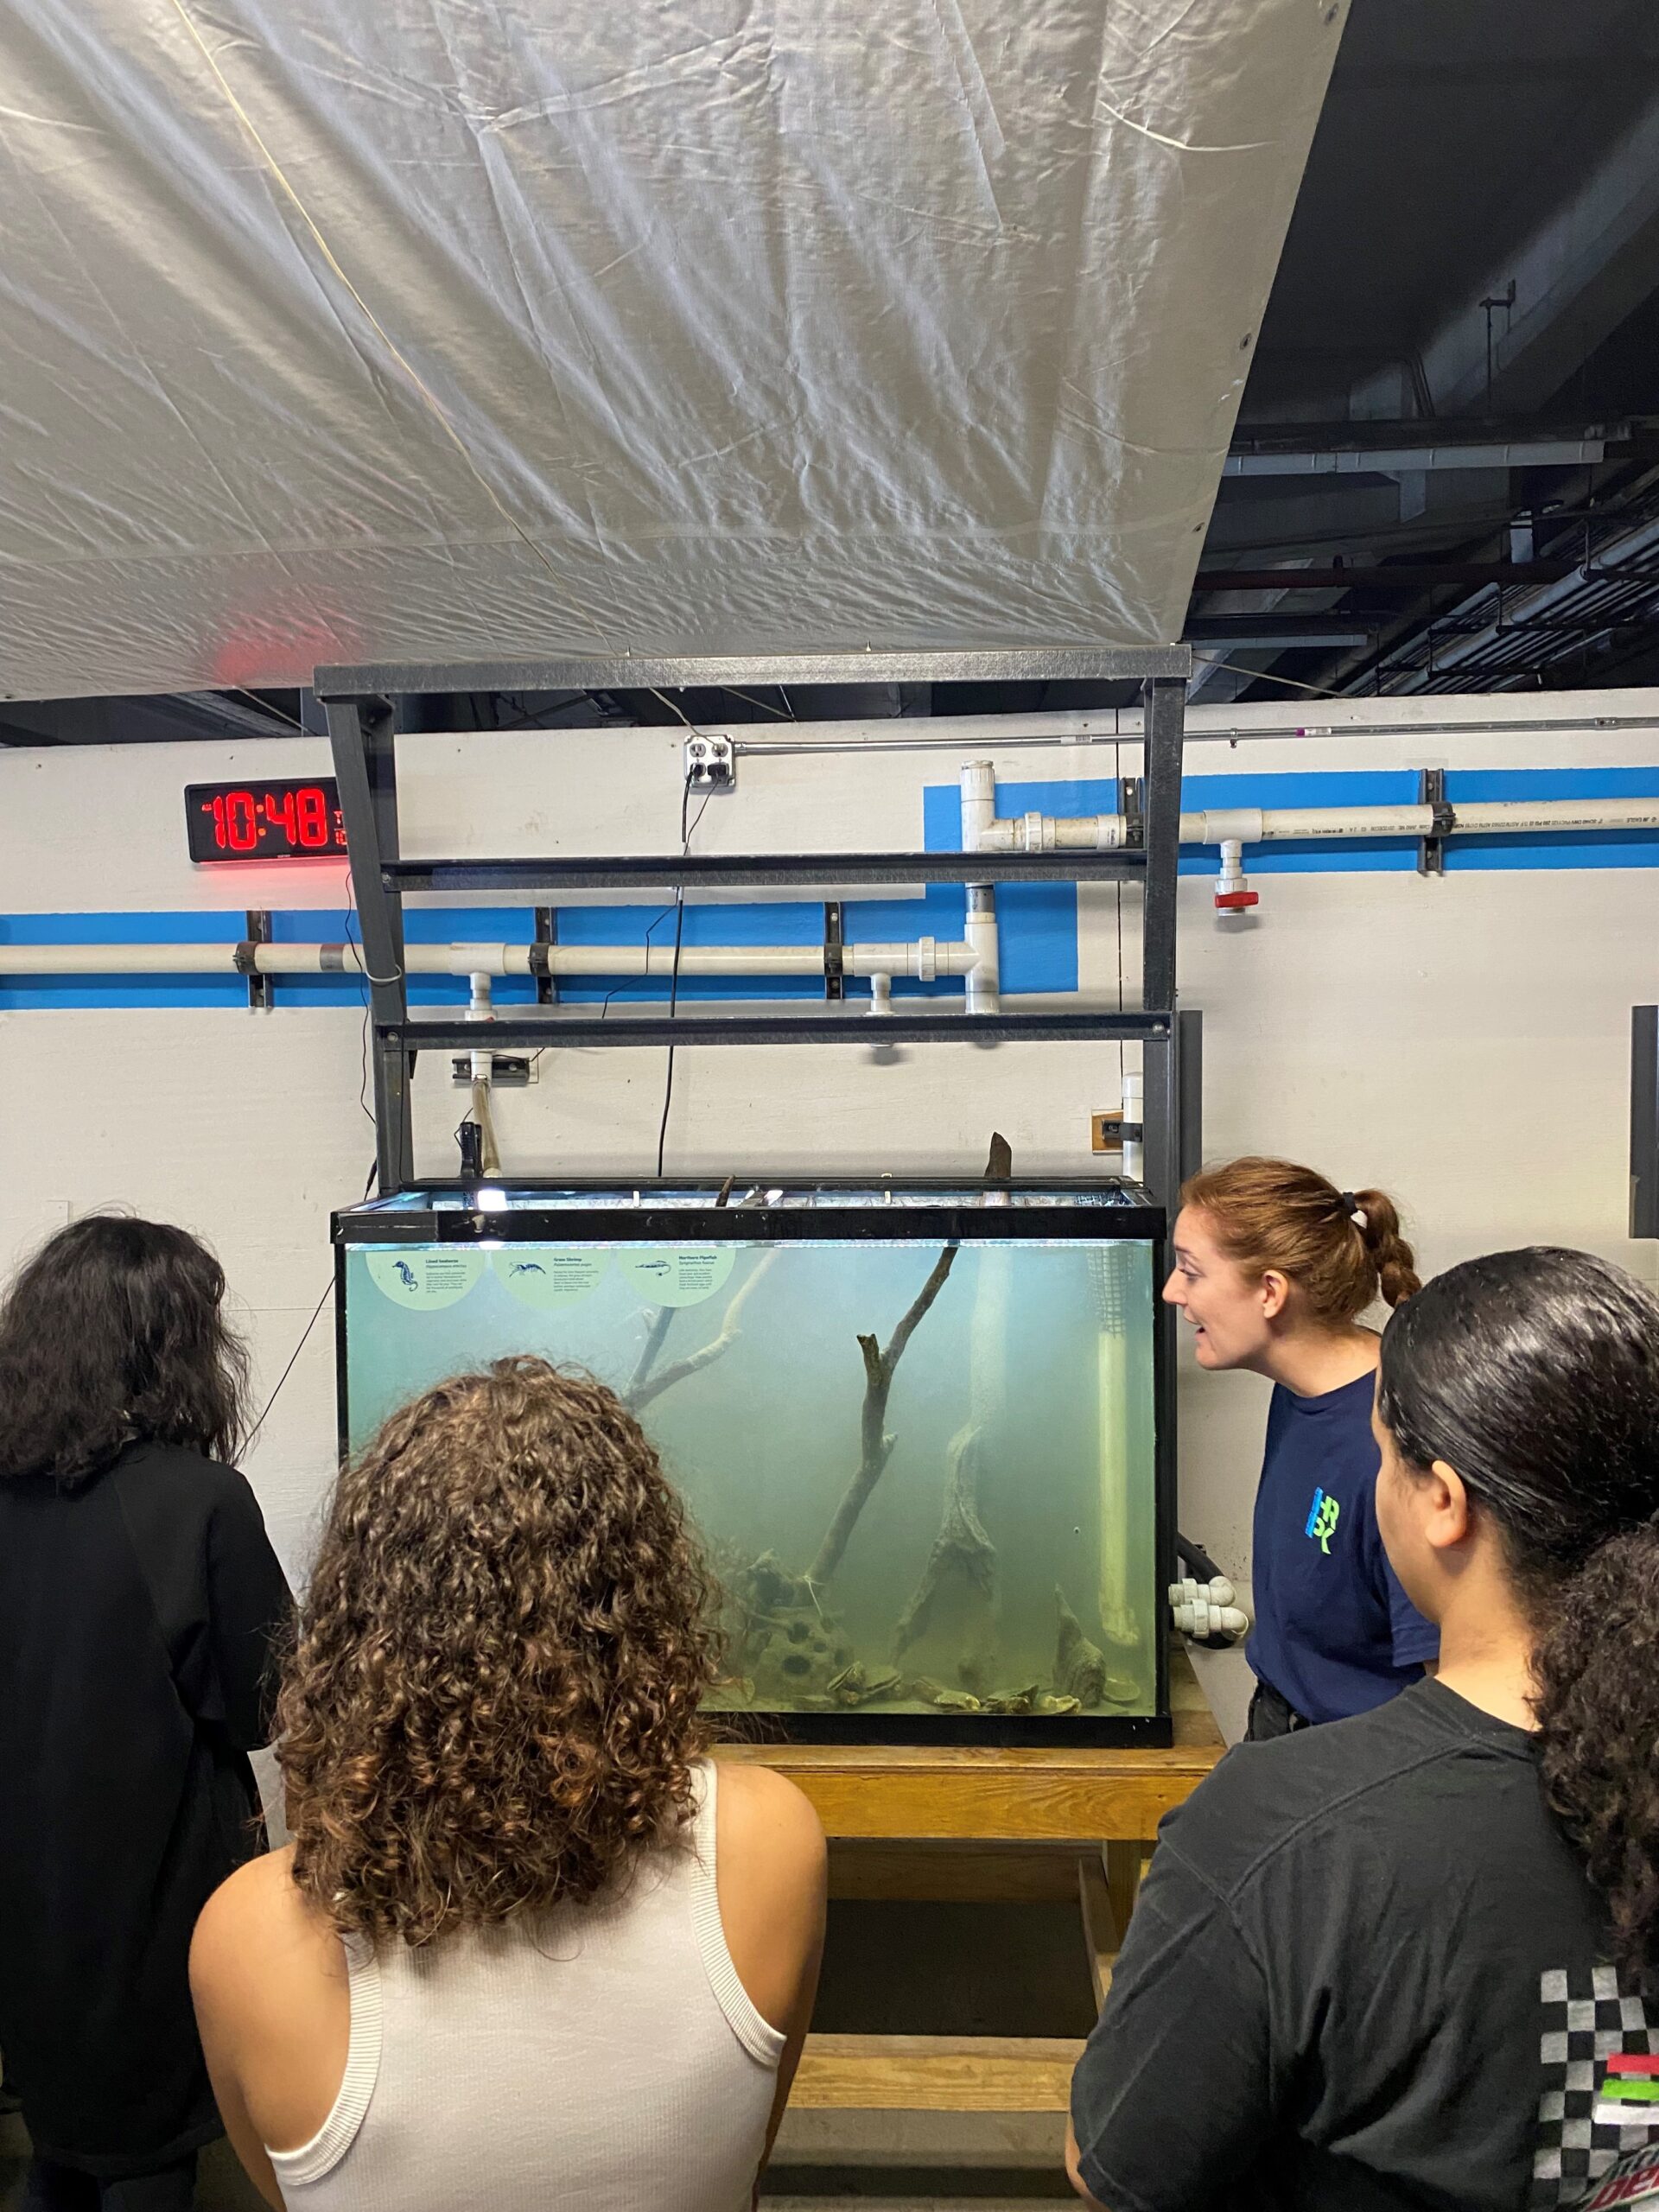 A Hudson River Park River Project staffer leads a tour of the Pier 40 Wetlab, describing the wildlife inside an aquarium tank